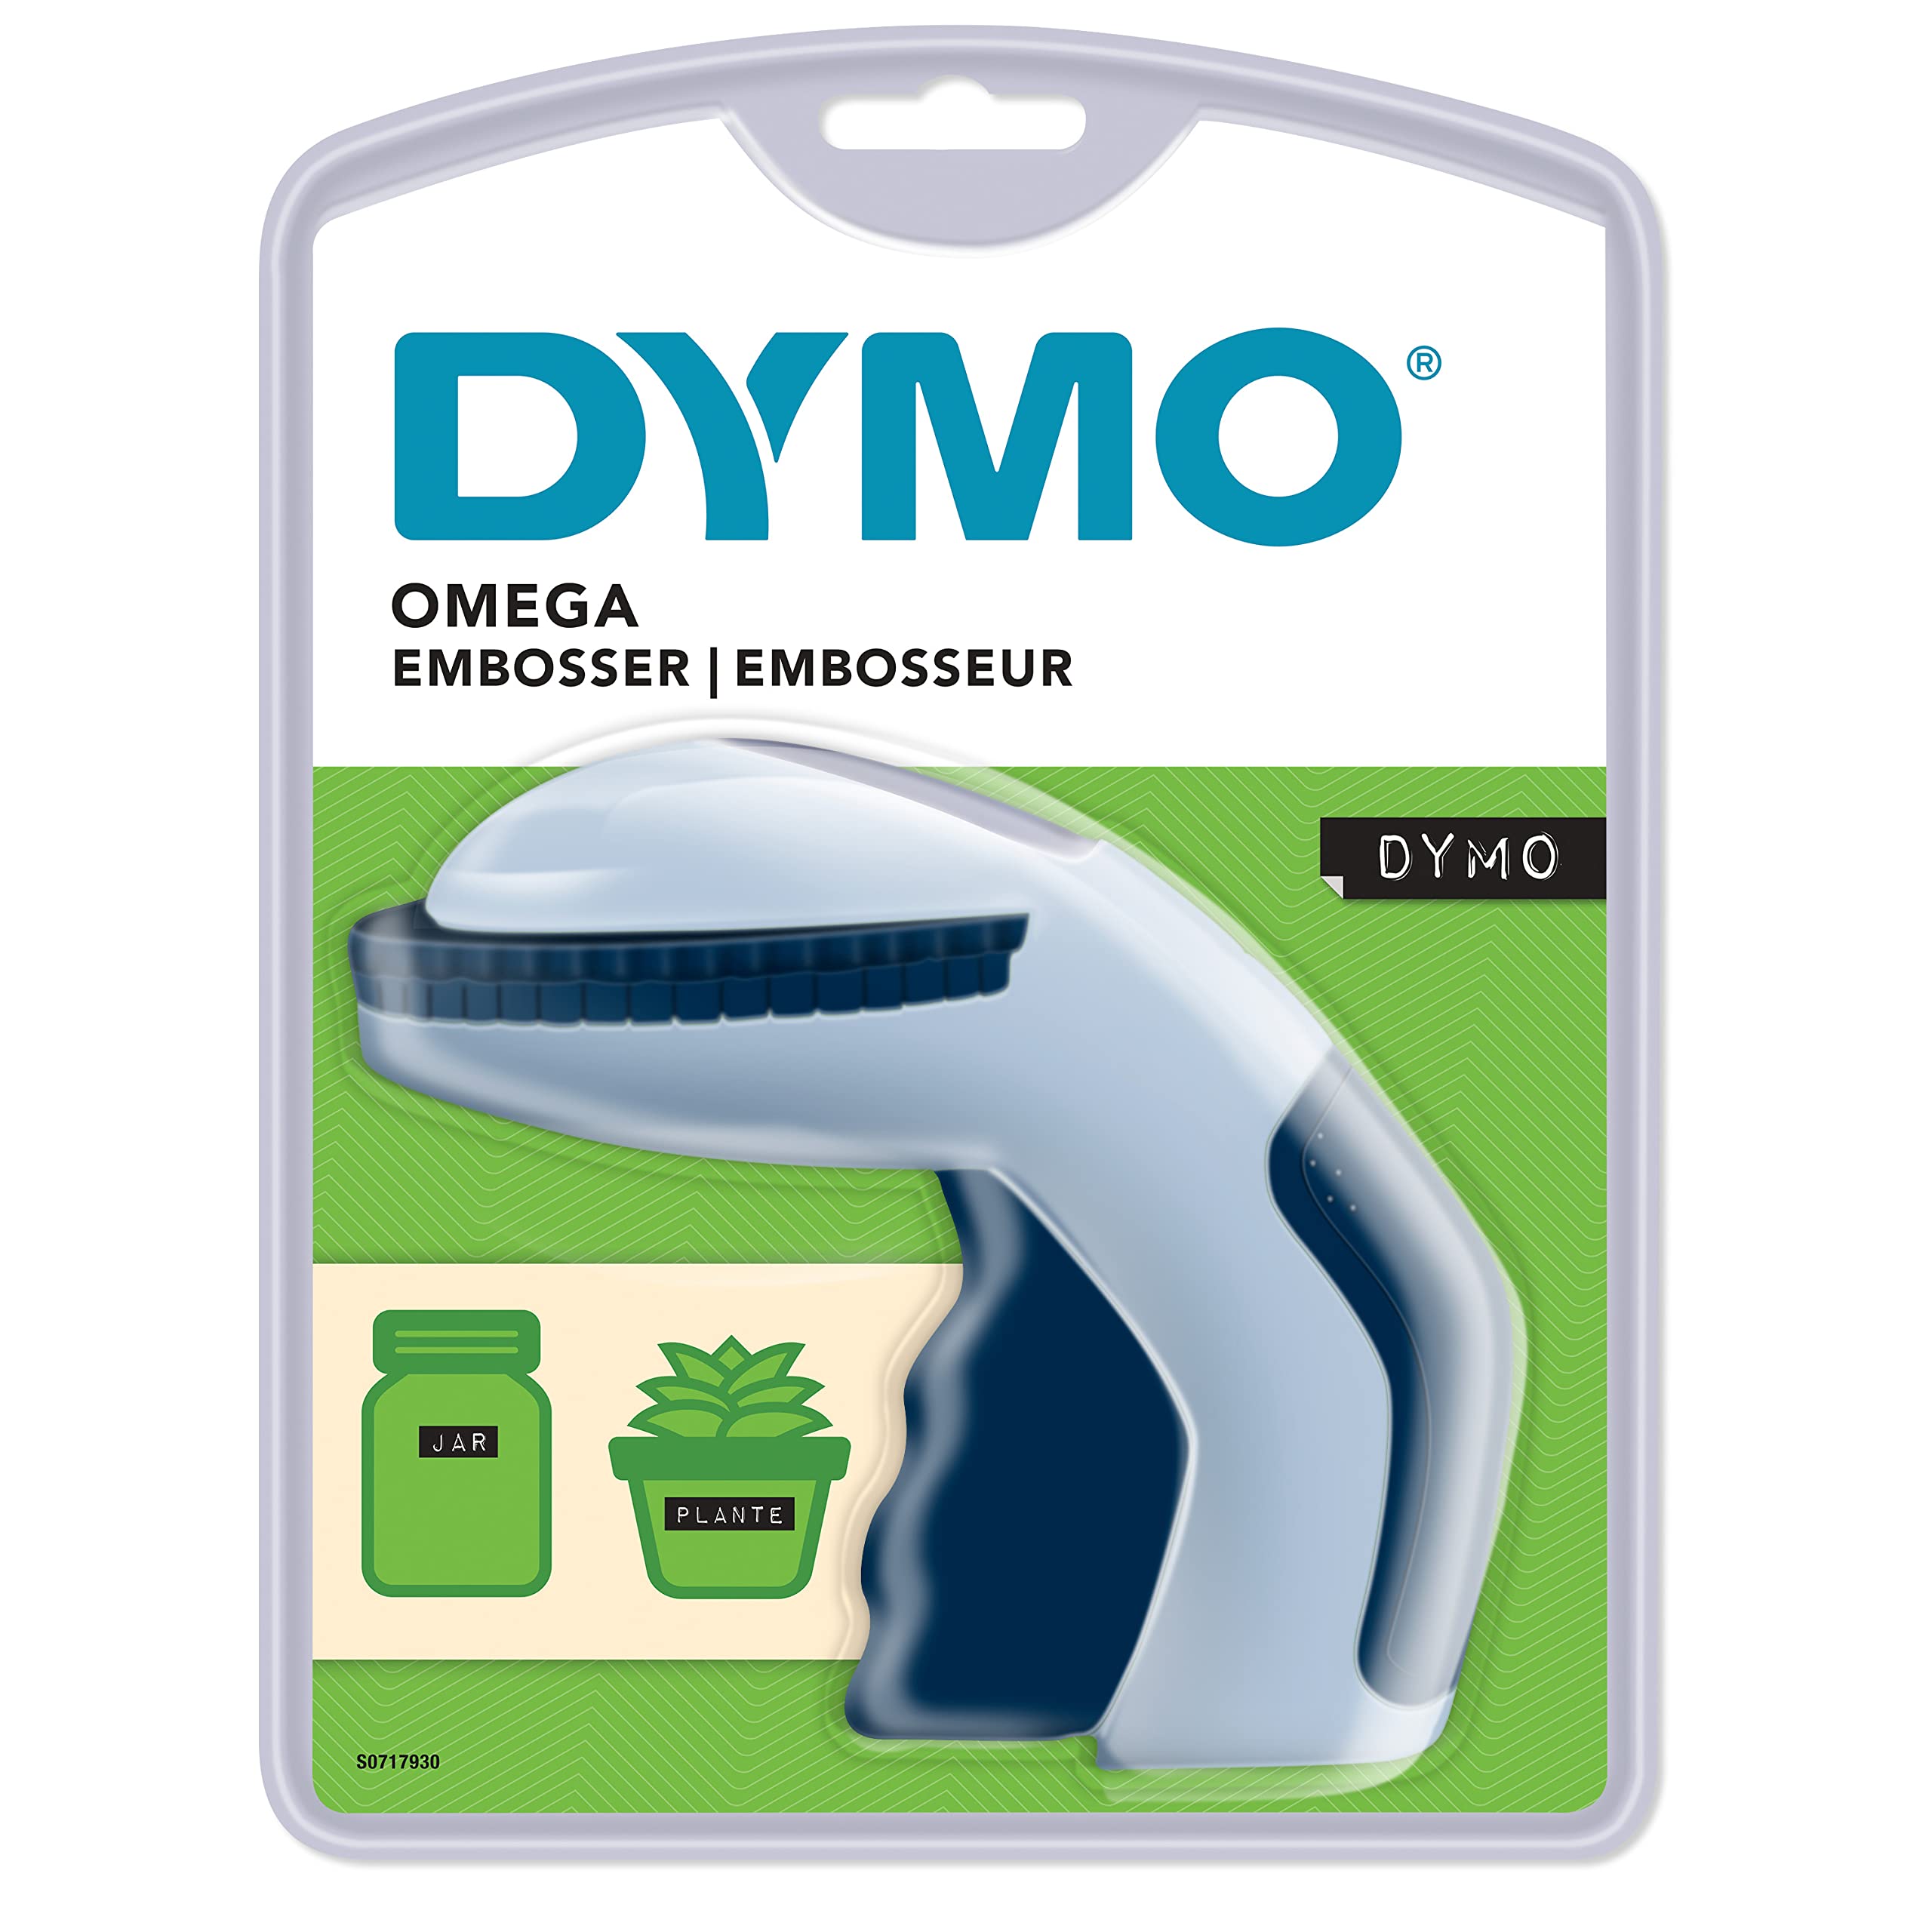 Dymo S0717930 Omega Home Embossing Label Maker, Grey and Navy, Embosser